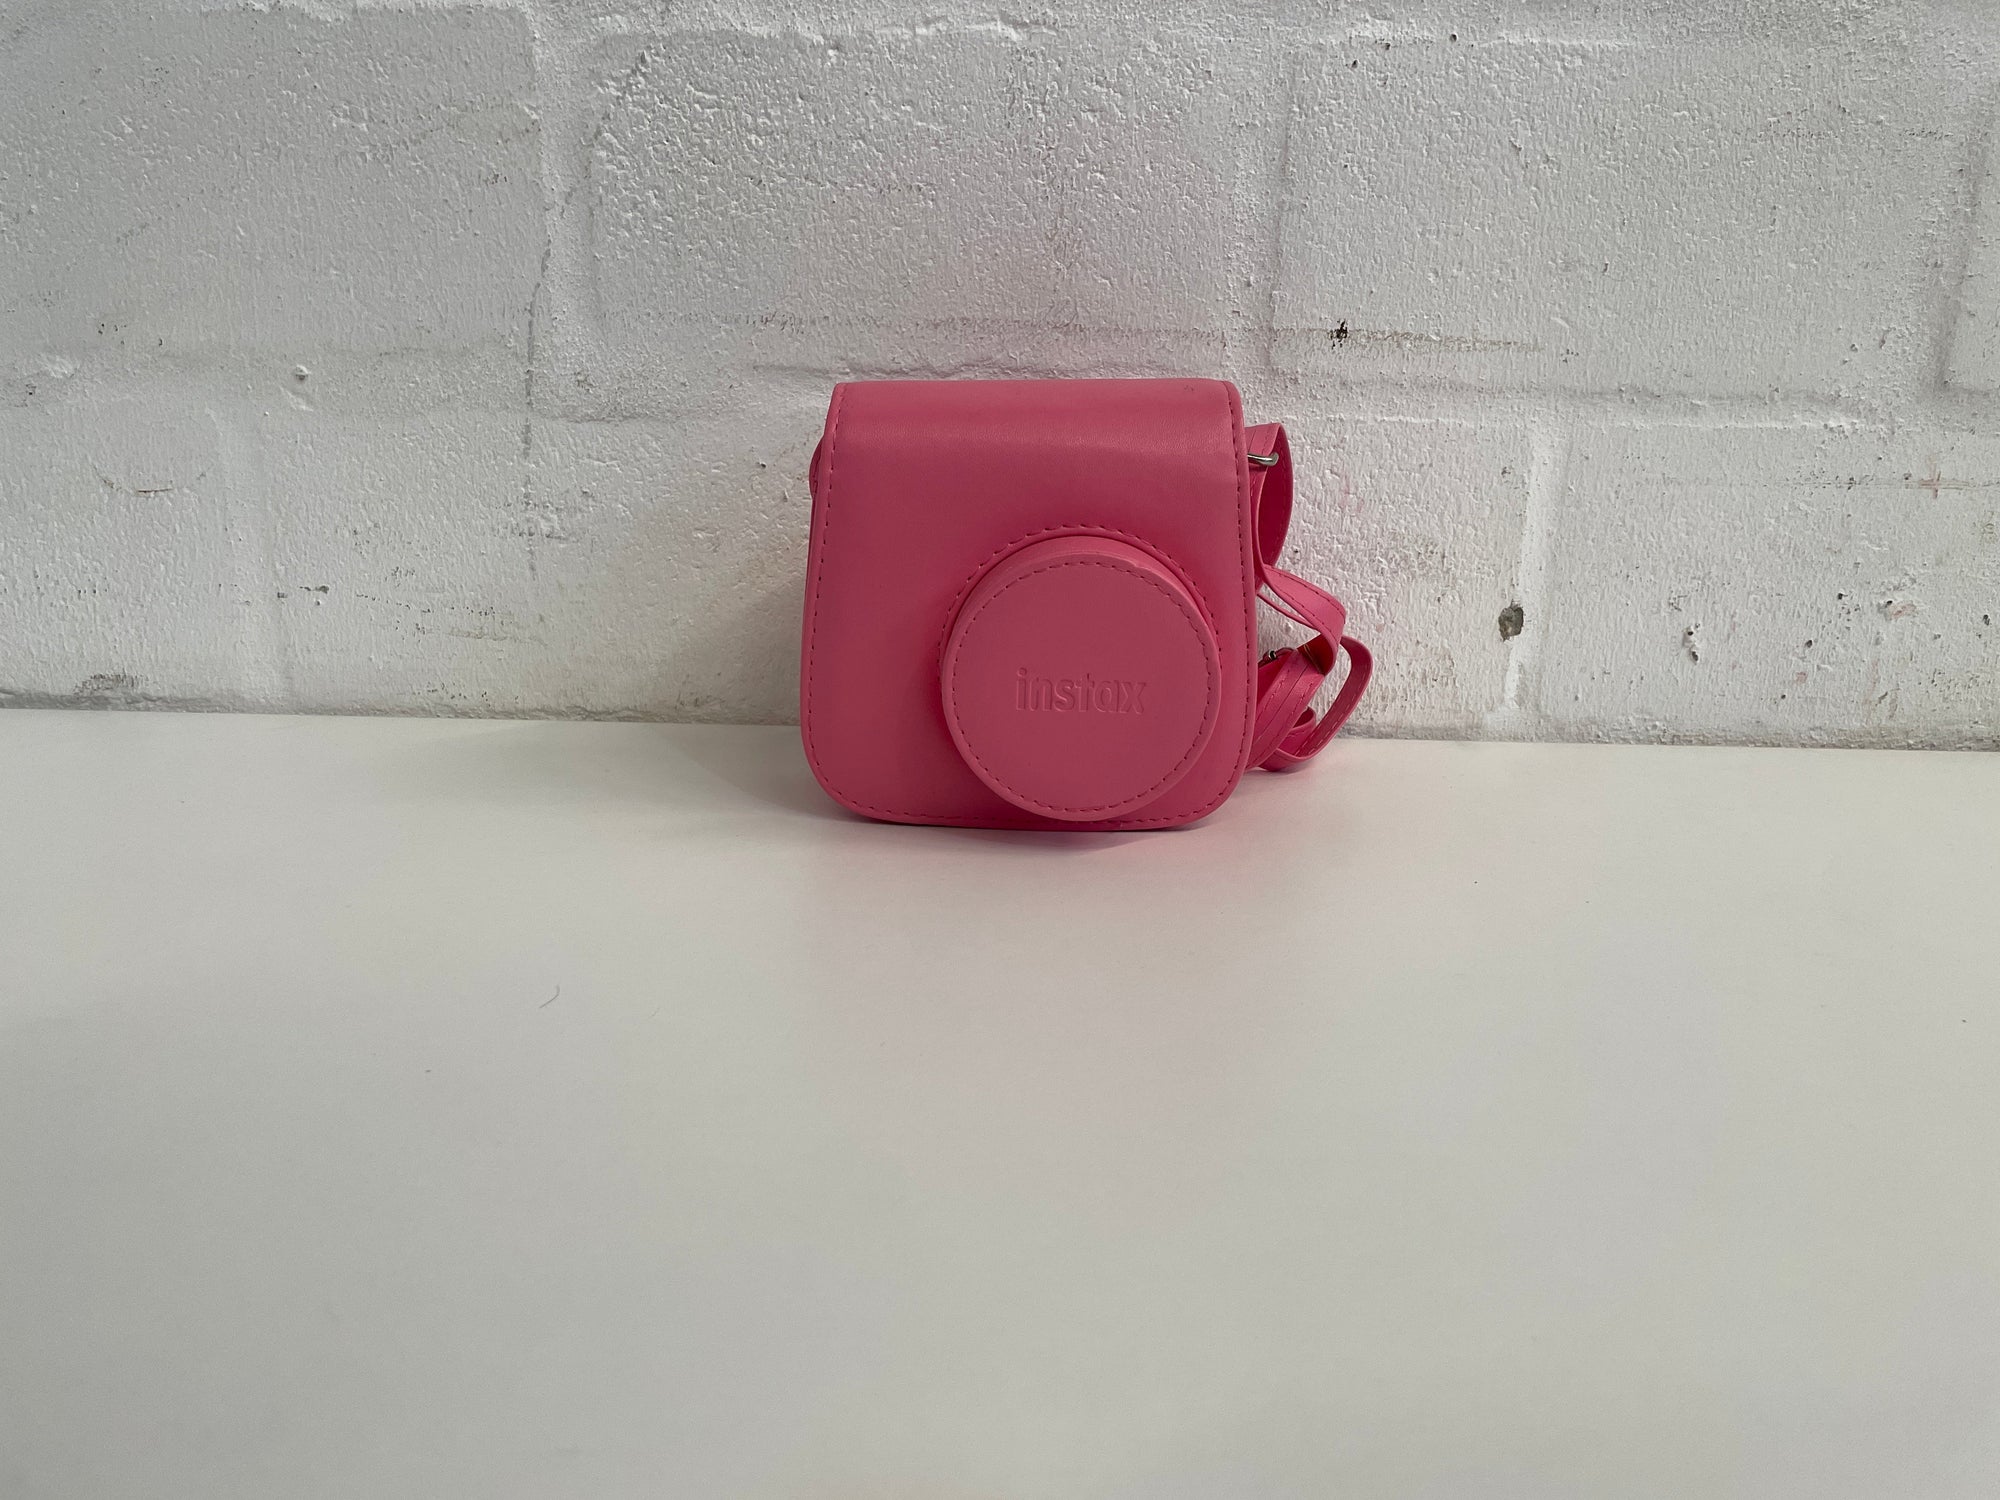 Instax Mini 9 Camera Pouch Pink